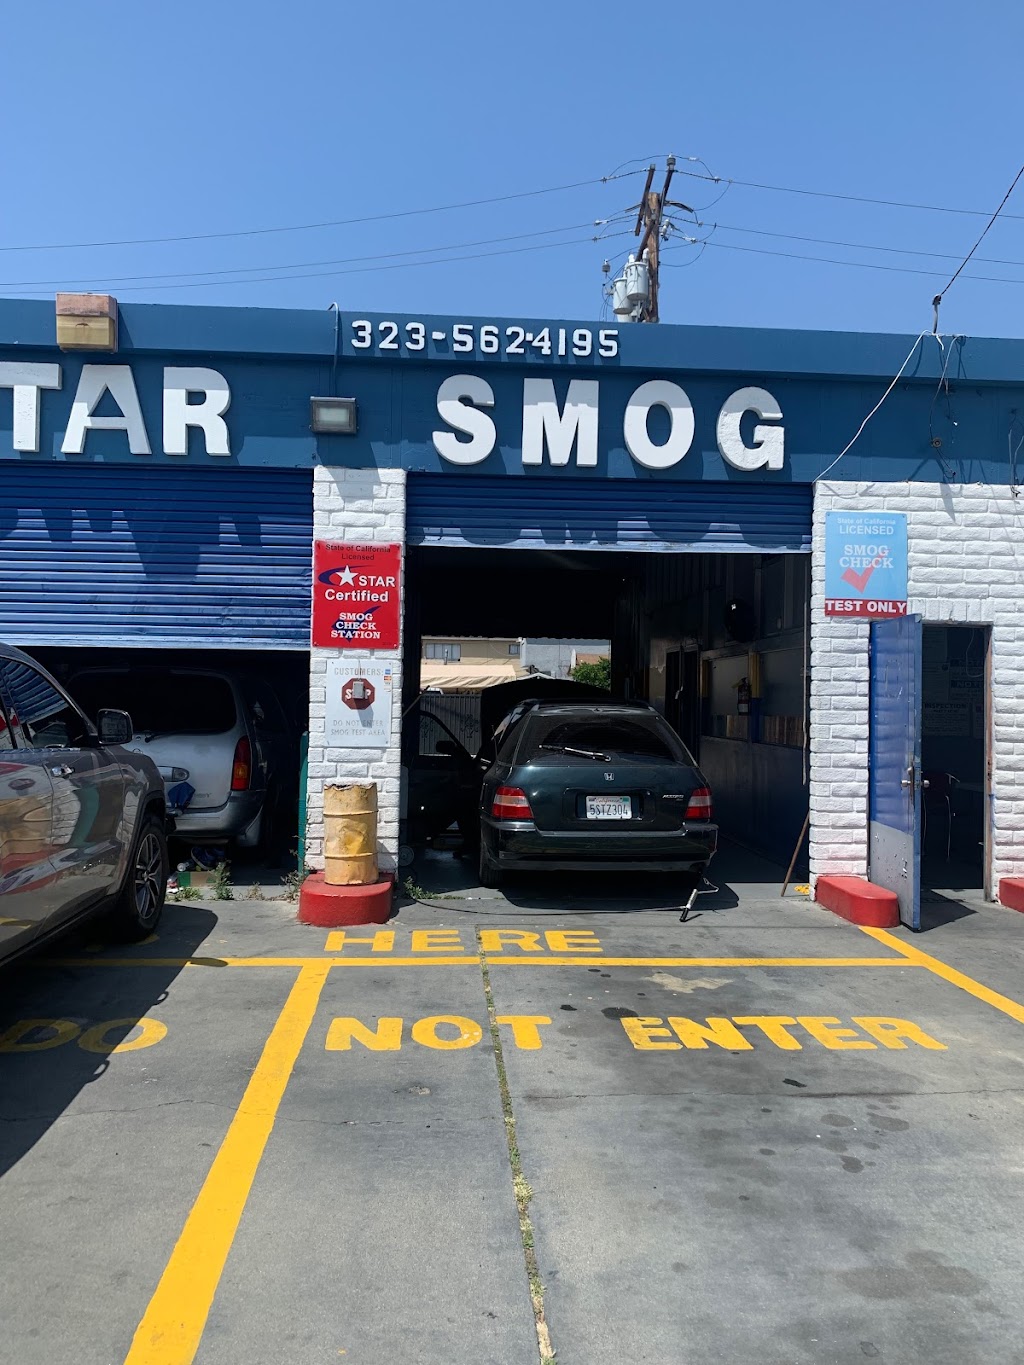 ABC Smog Check STAR Station | 4555 E Gage Ave, Bell, CA 90201, USA | Phone: (323) 712-3639